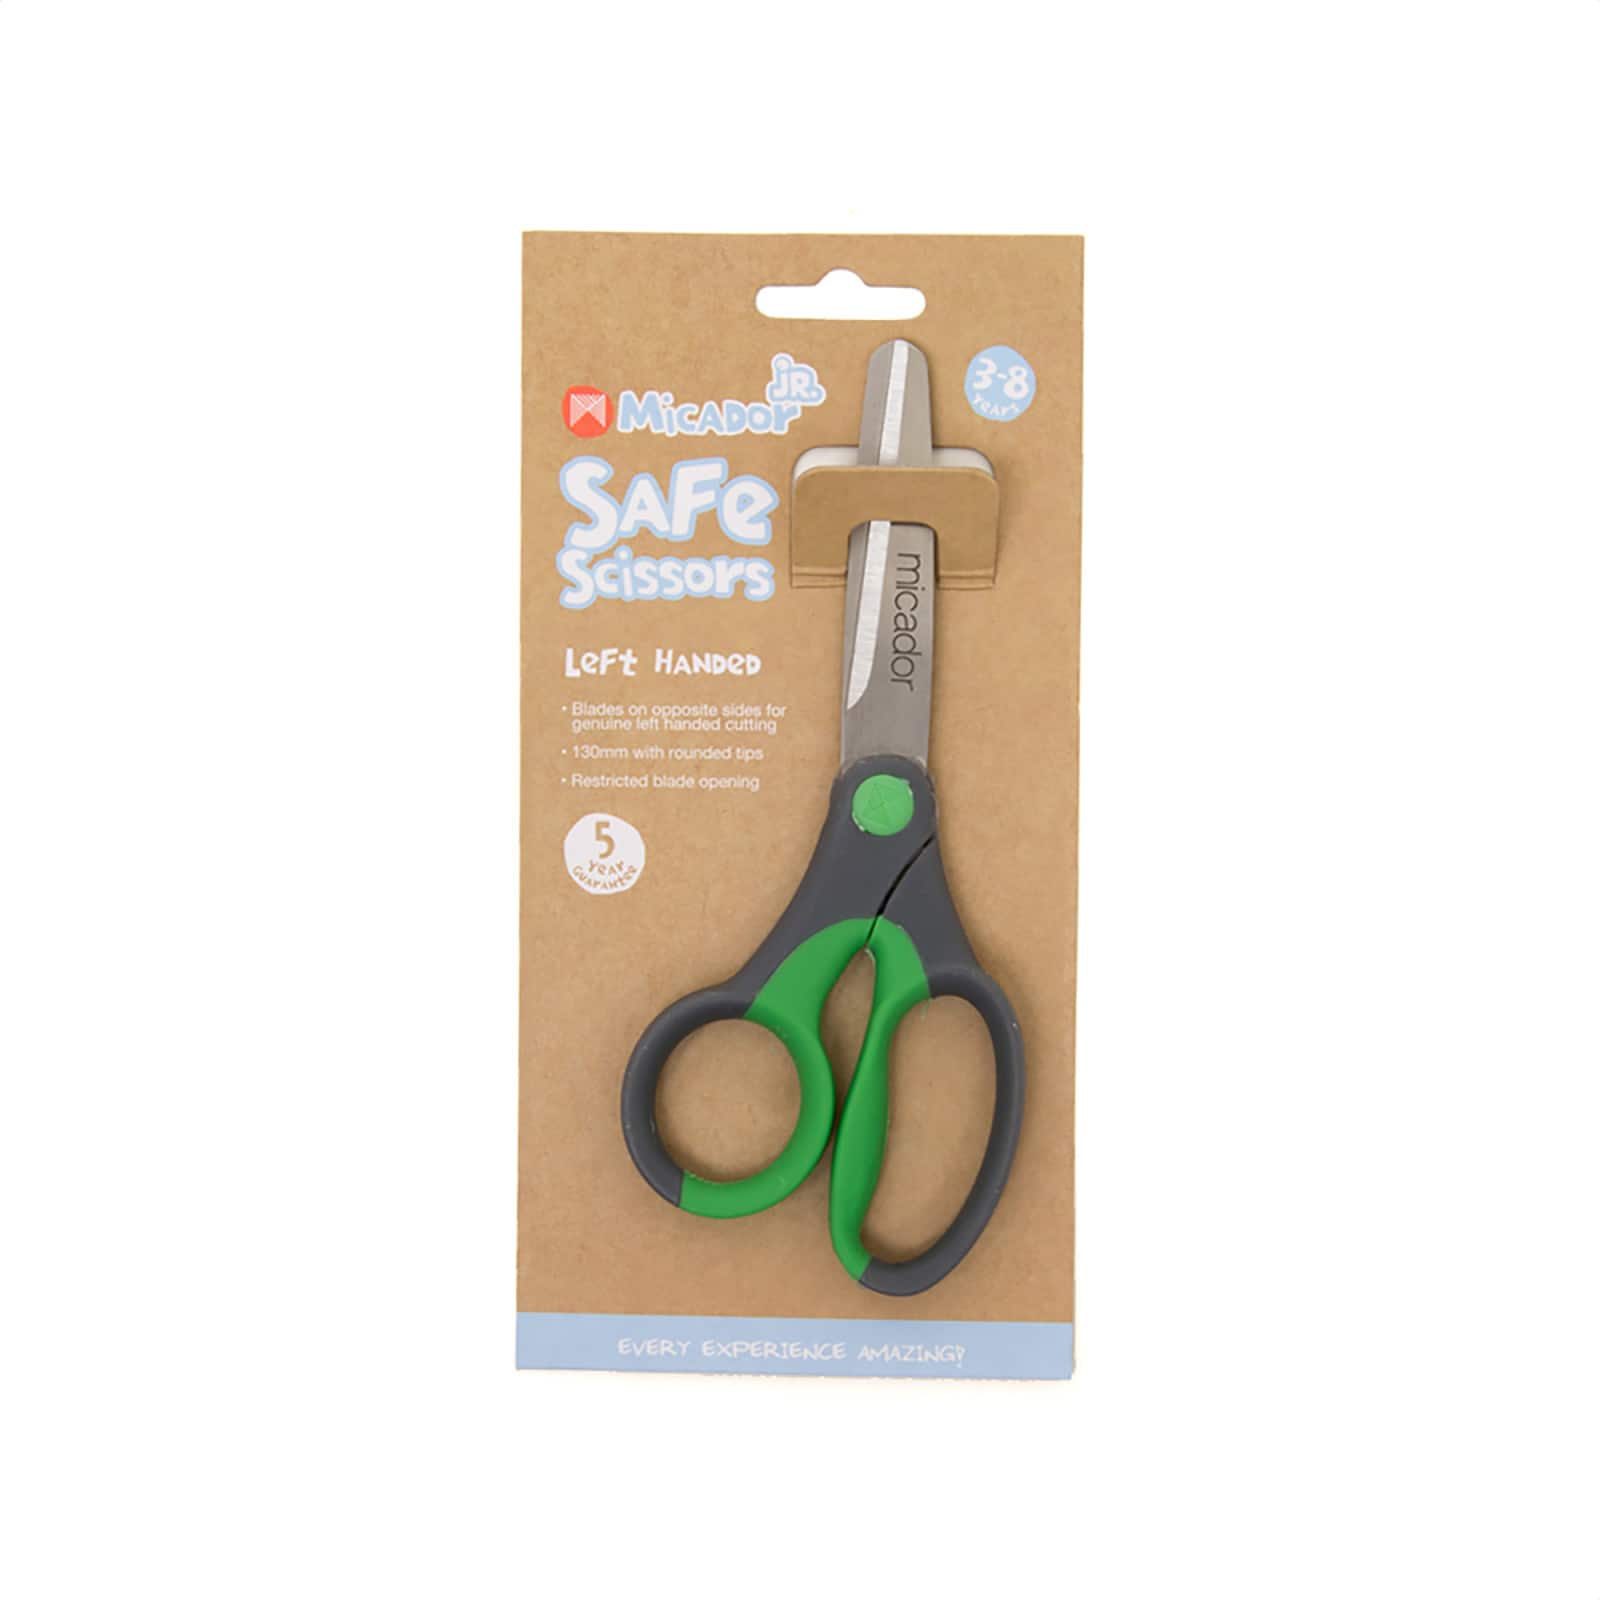 NEW! Playskool 2 Pack Kids Safety Scissors Wavy Cut/ Straight Cut Crafts  School